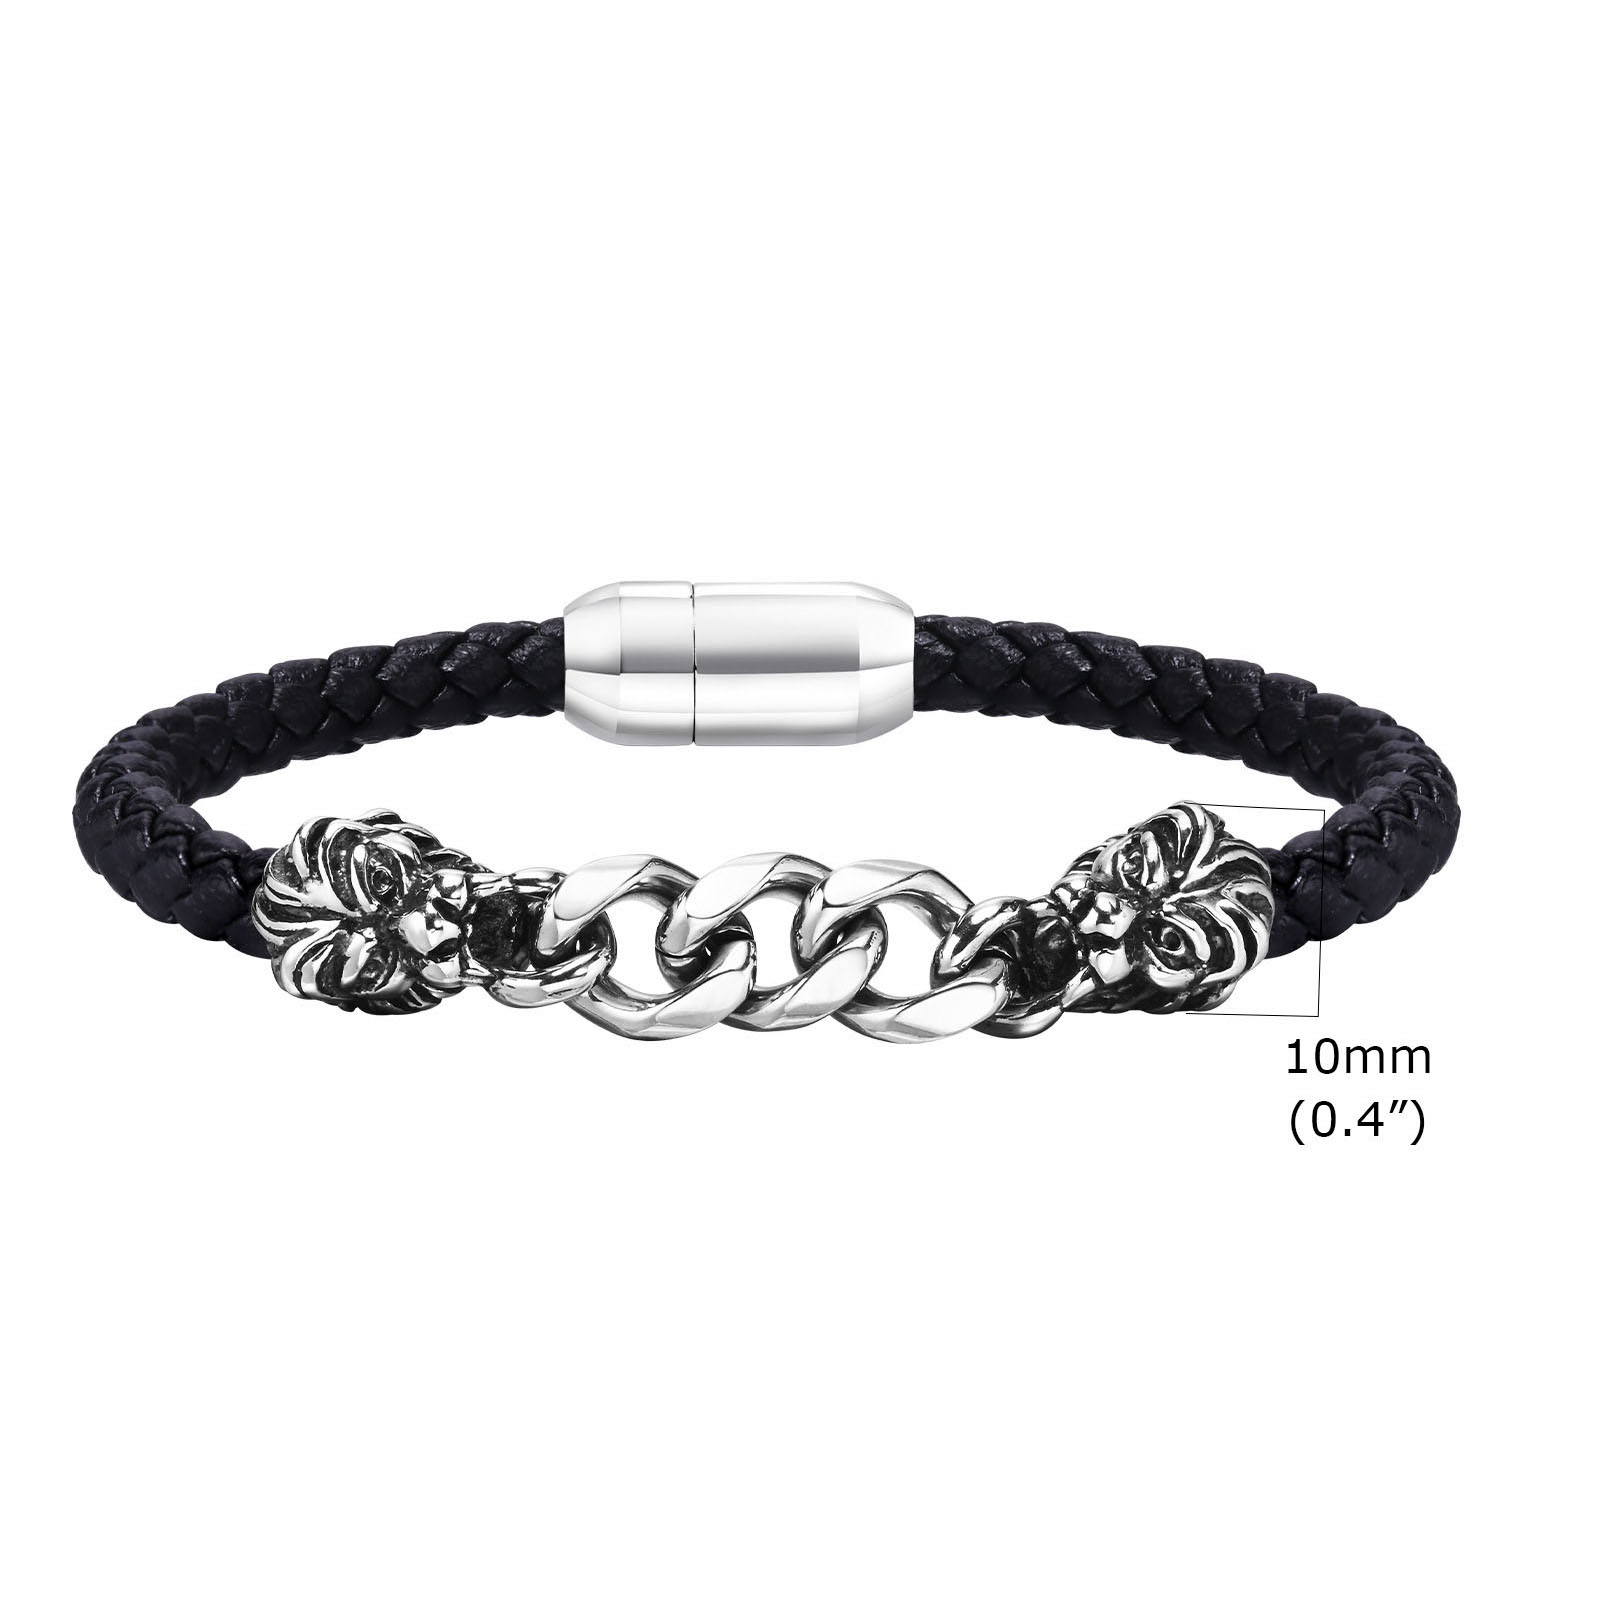 2:Lion's head bracelet